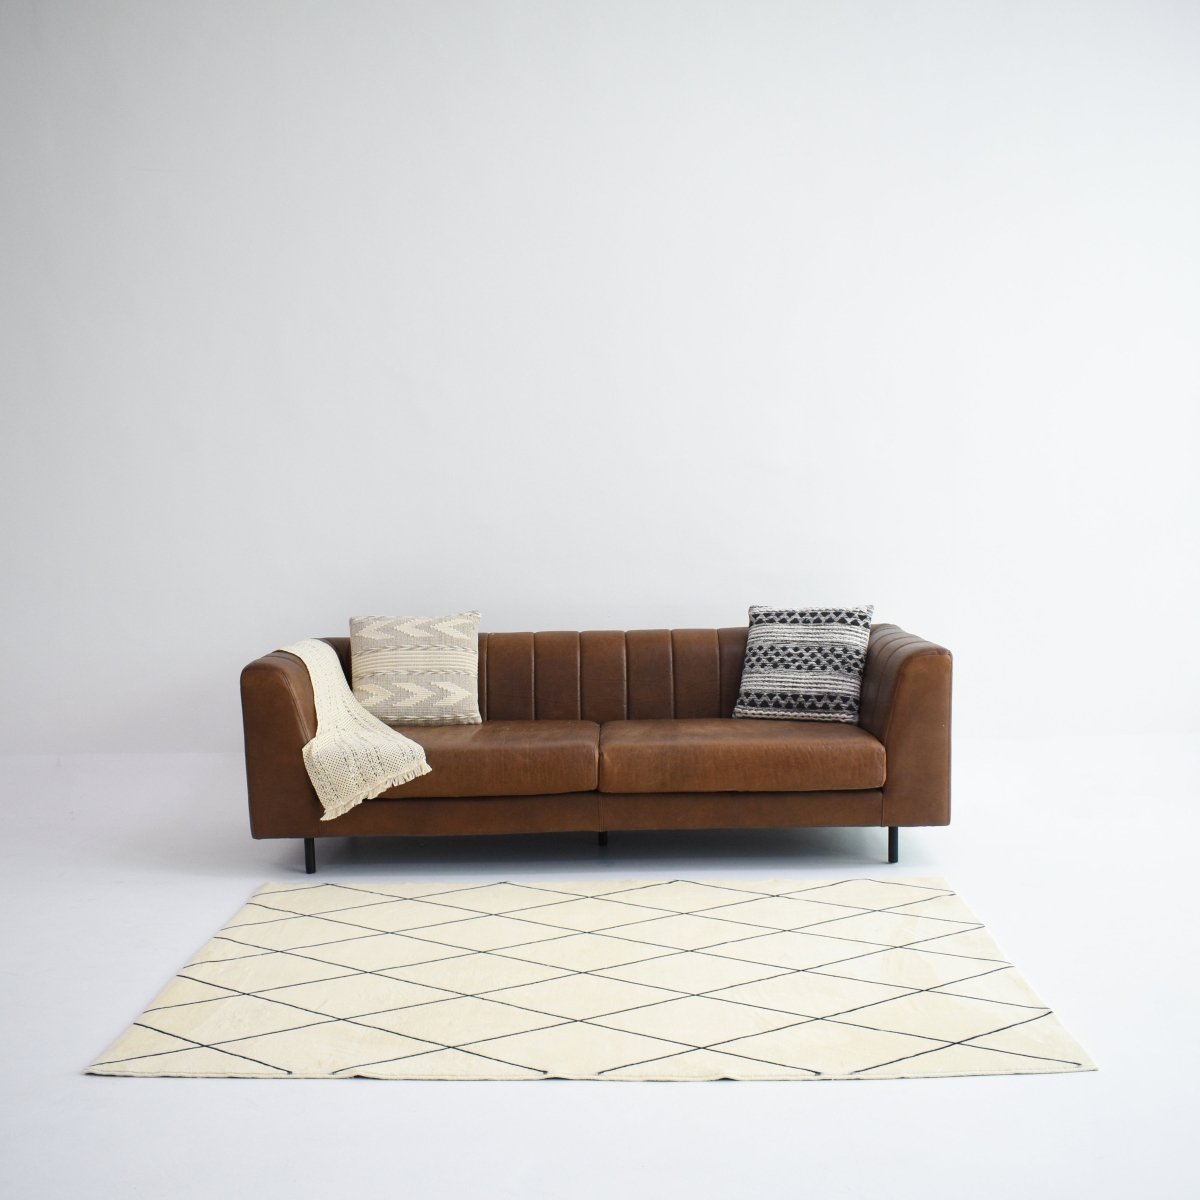 S-4235 Scandinavian Carpet | Polyfibre Cashmere Series - The Carpetier™